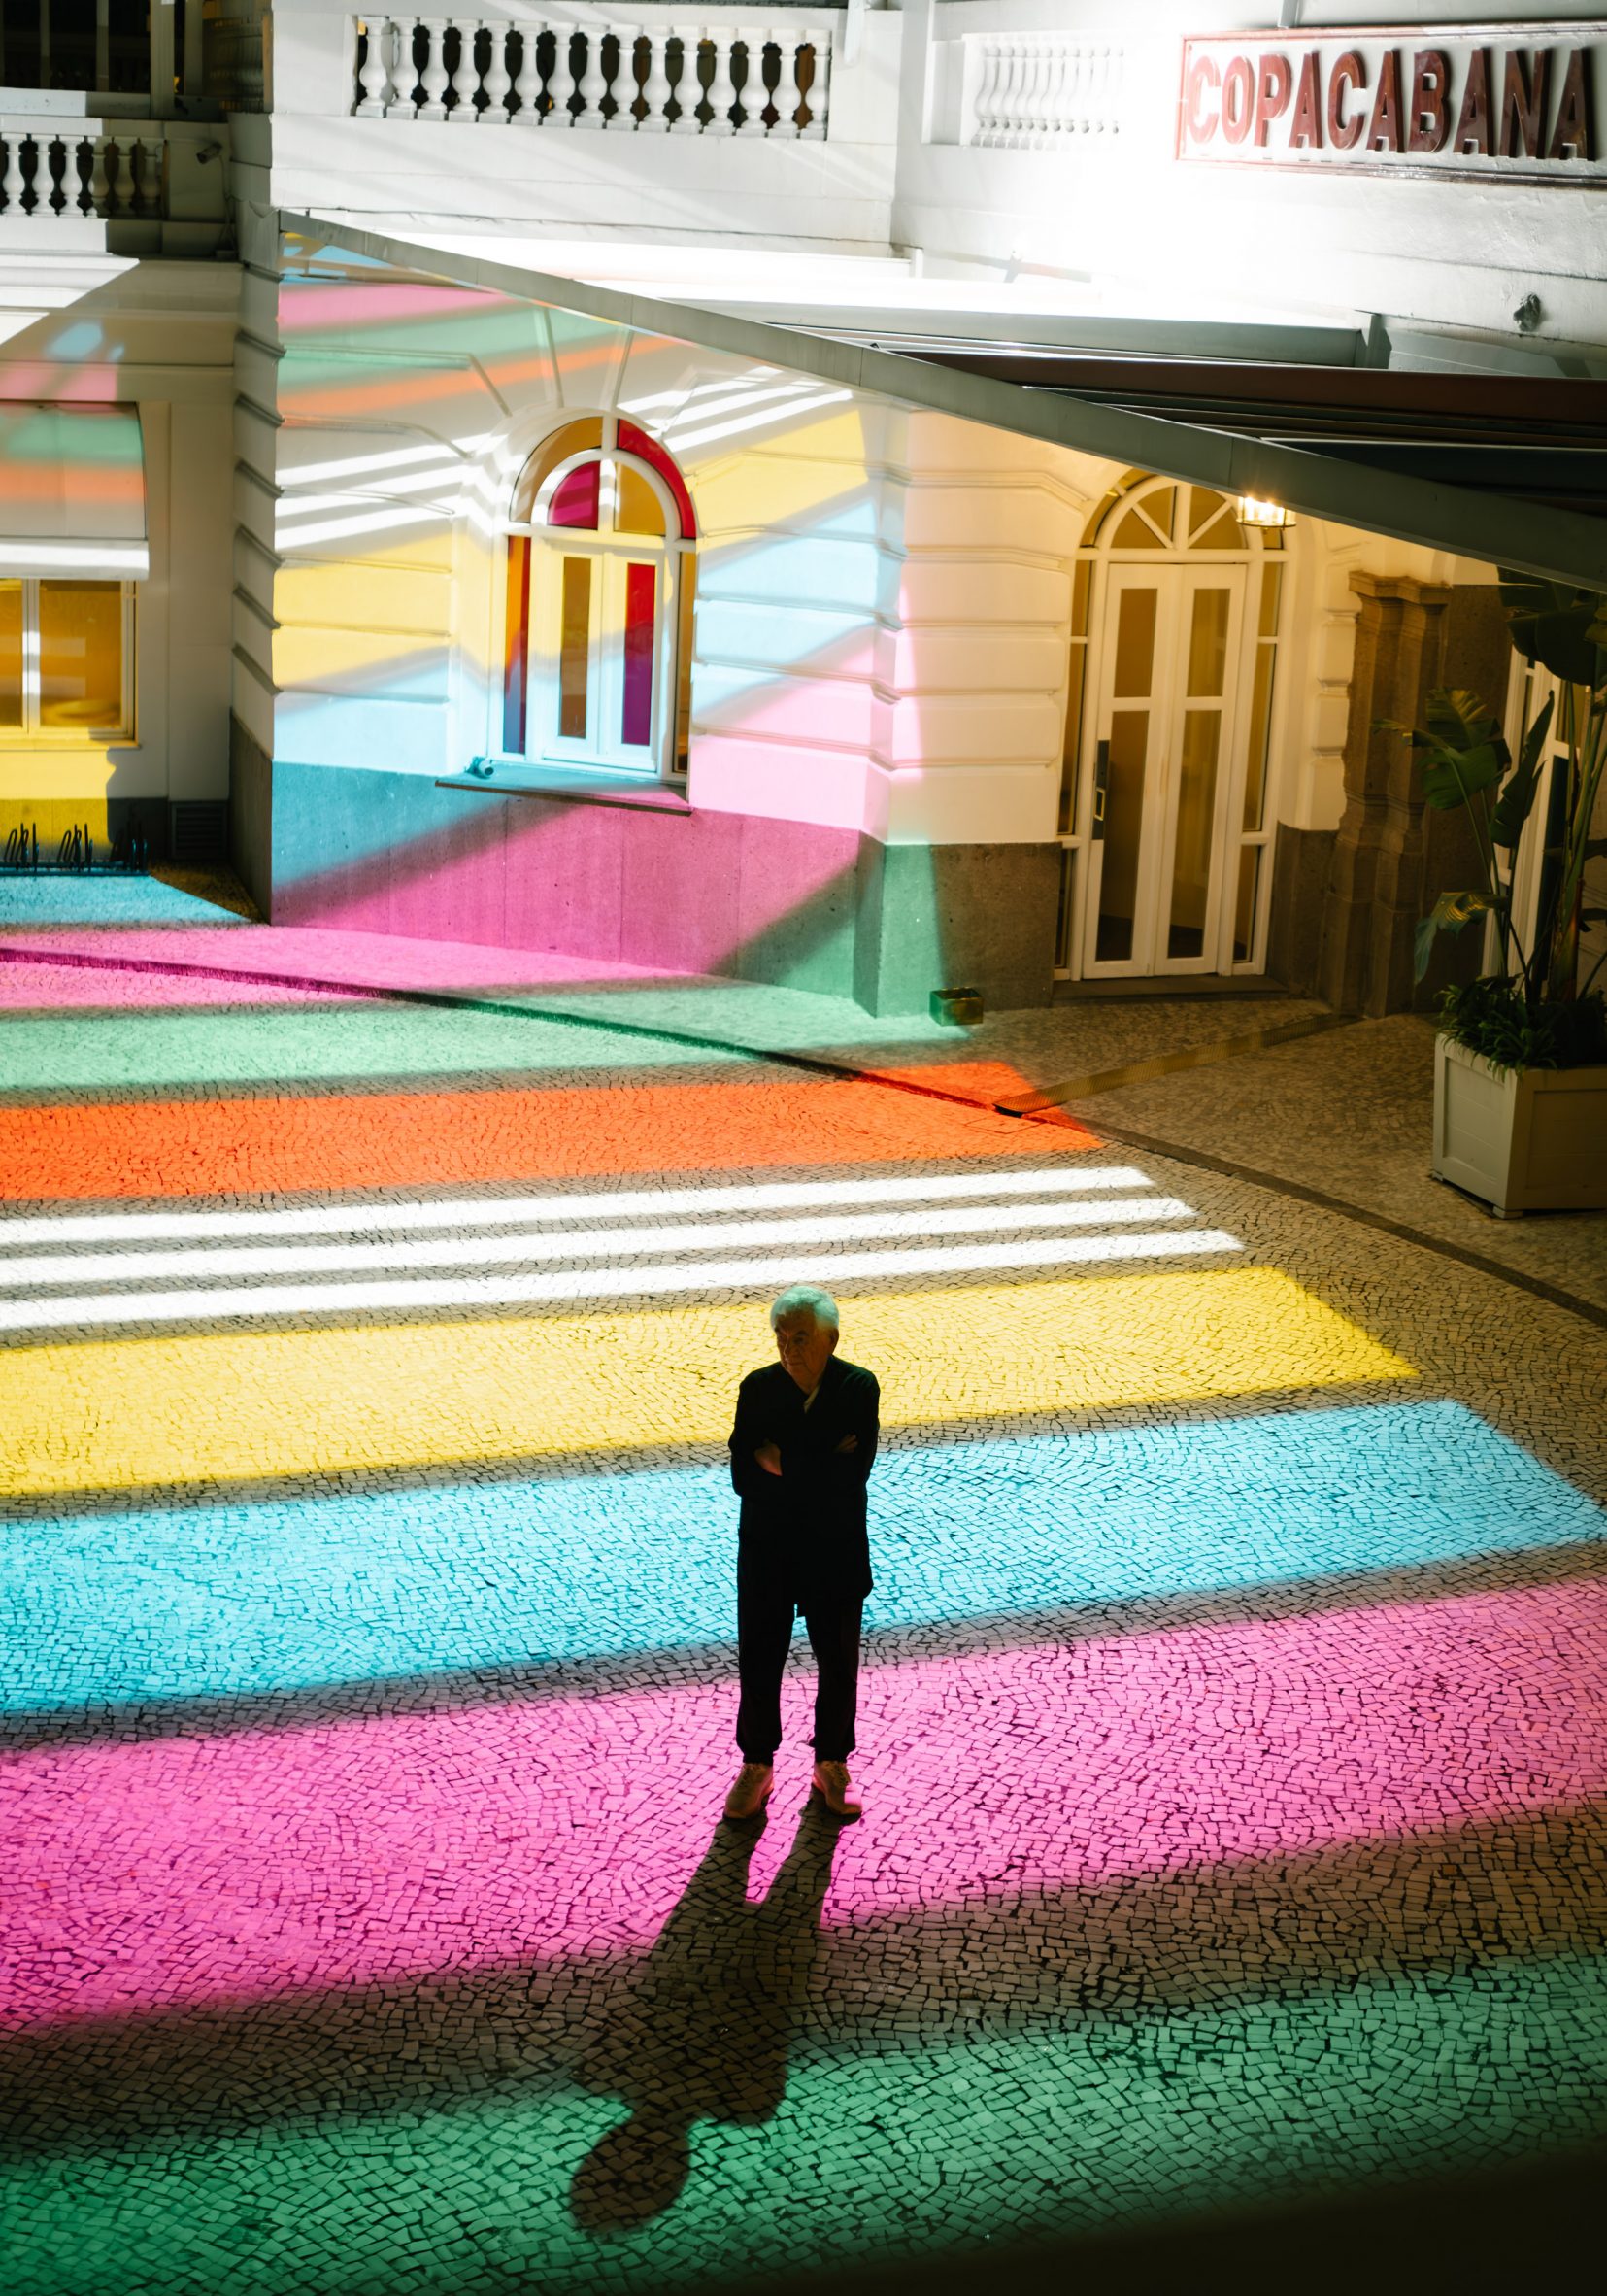 Haltes Colorées installation by Daniel Buren at Copacabana Palace, a Belmond hotel in Rio de Janeiro